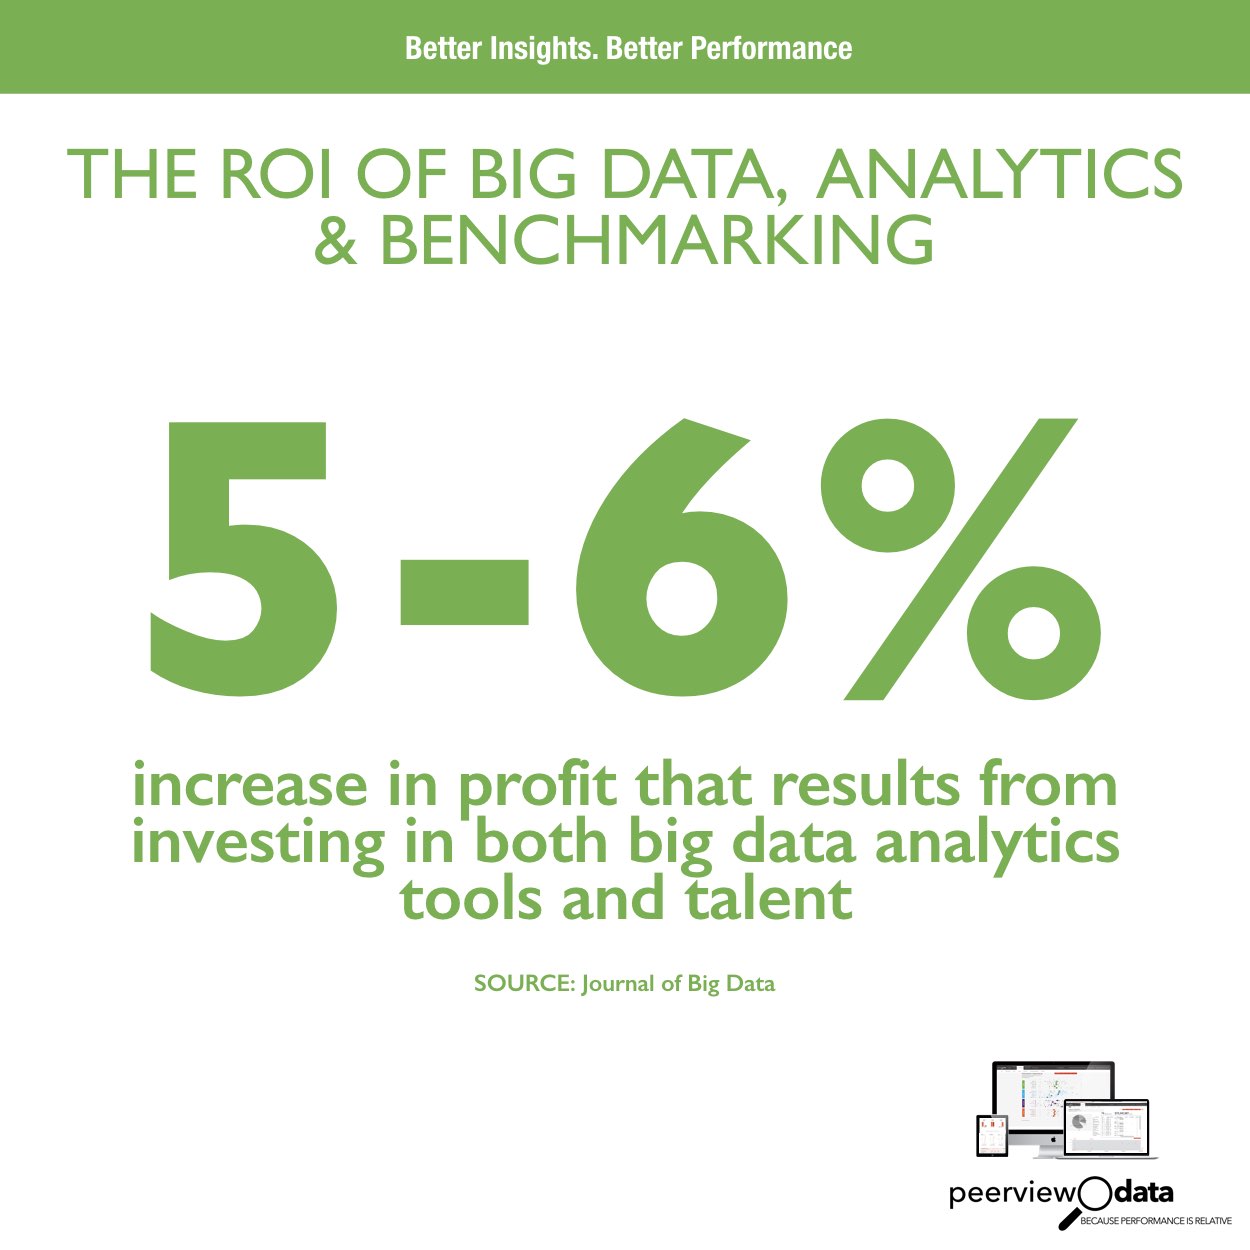 The ROI of Big Data, Analytics & Benchmarking #18